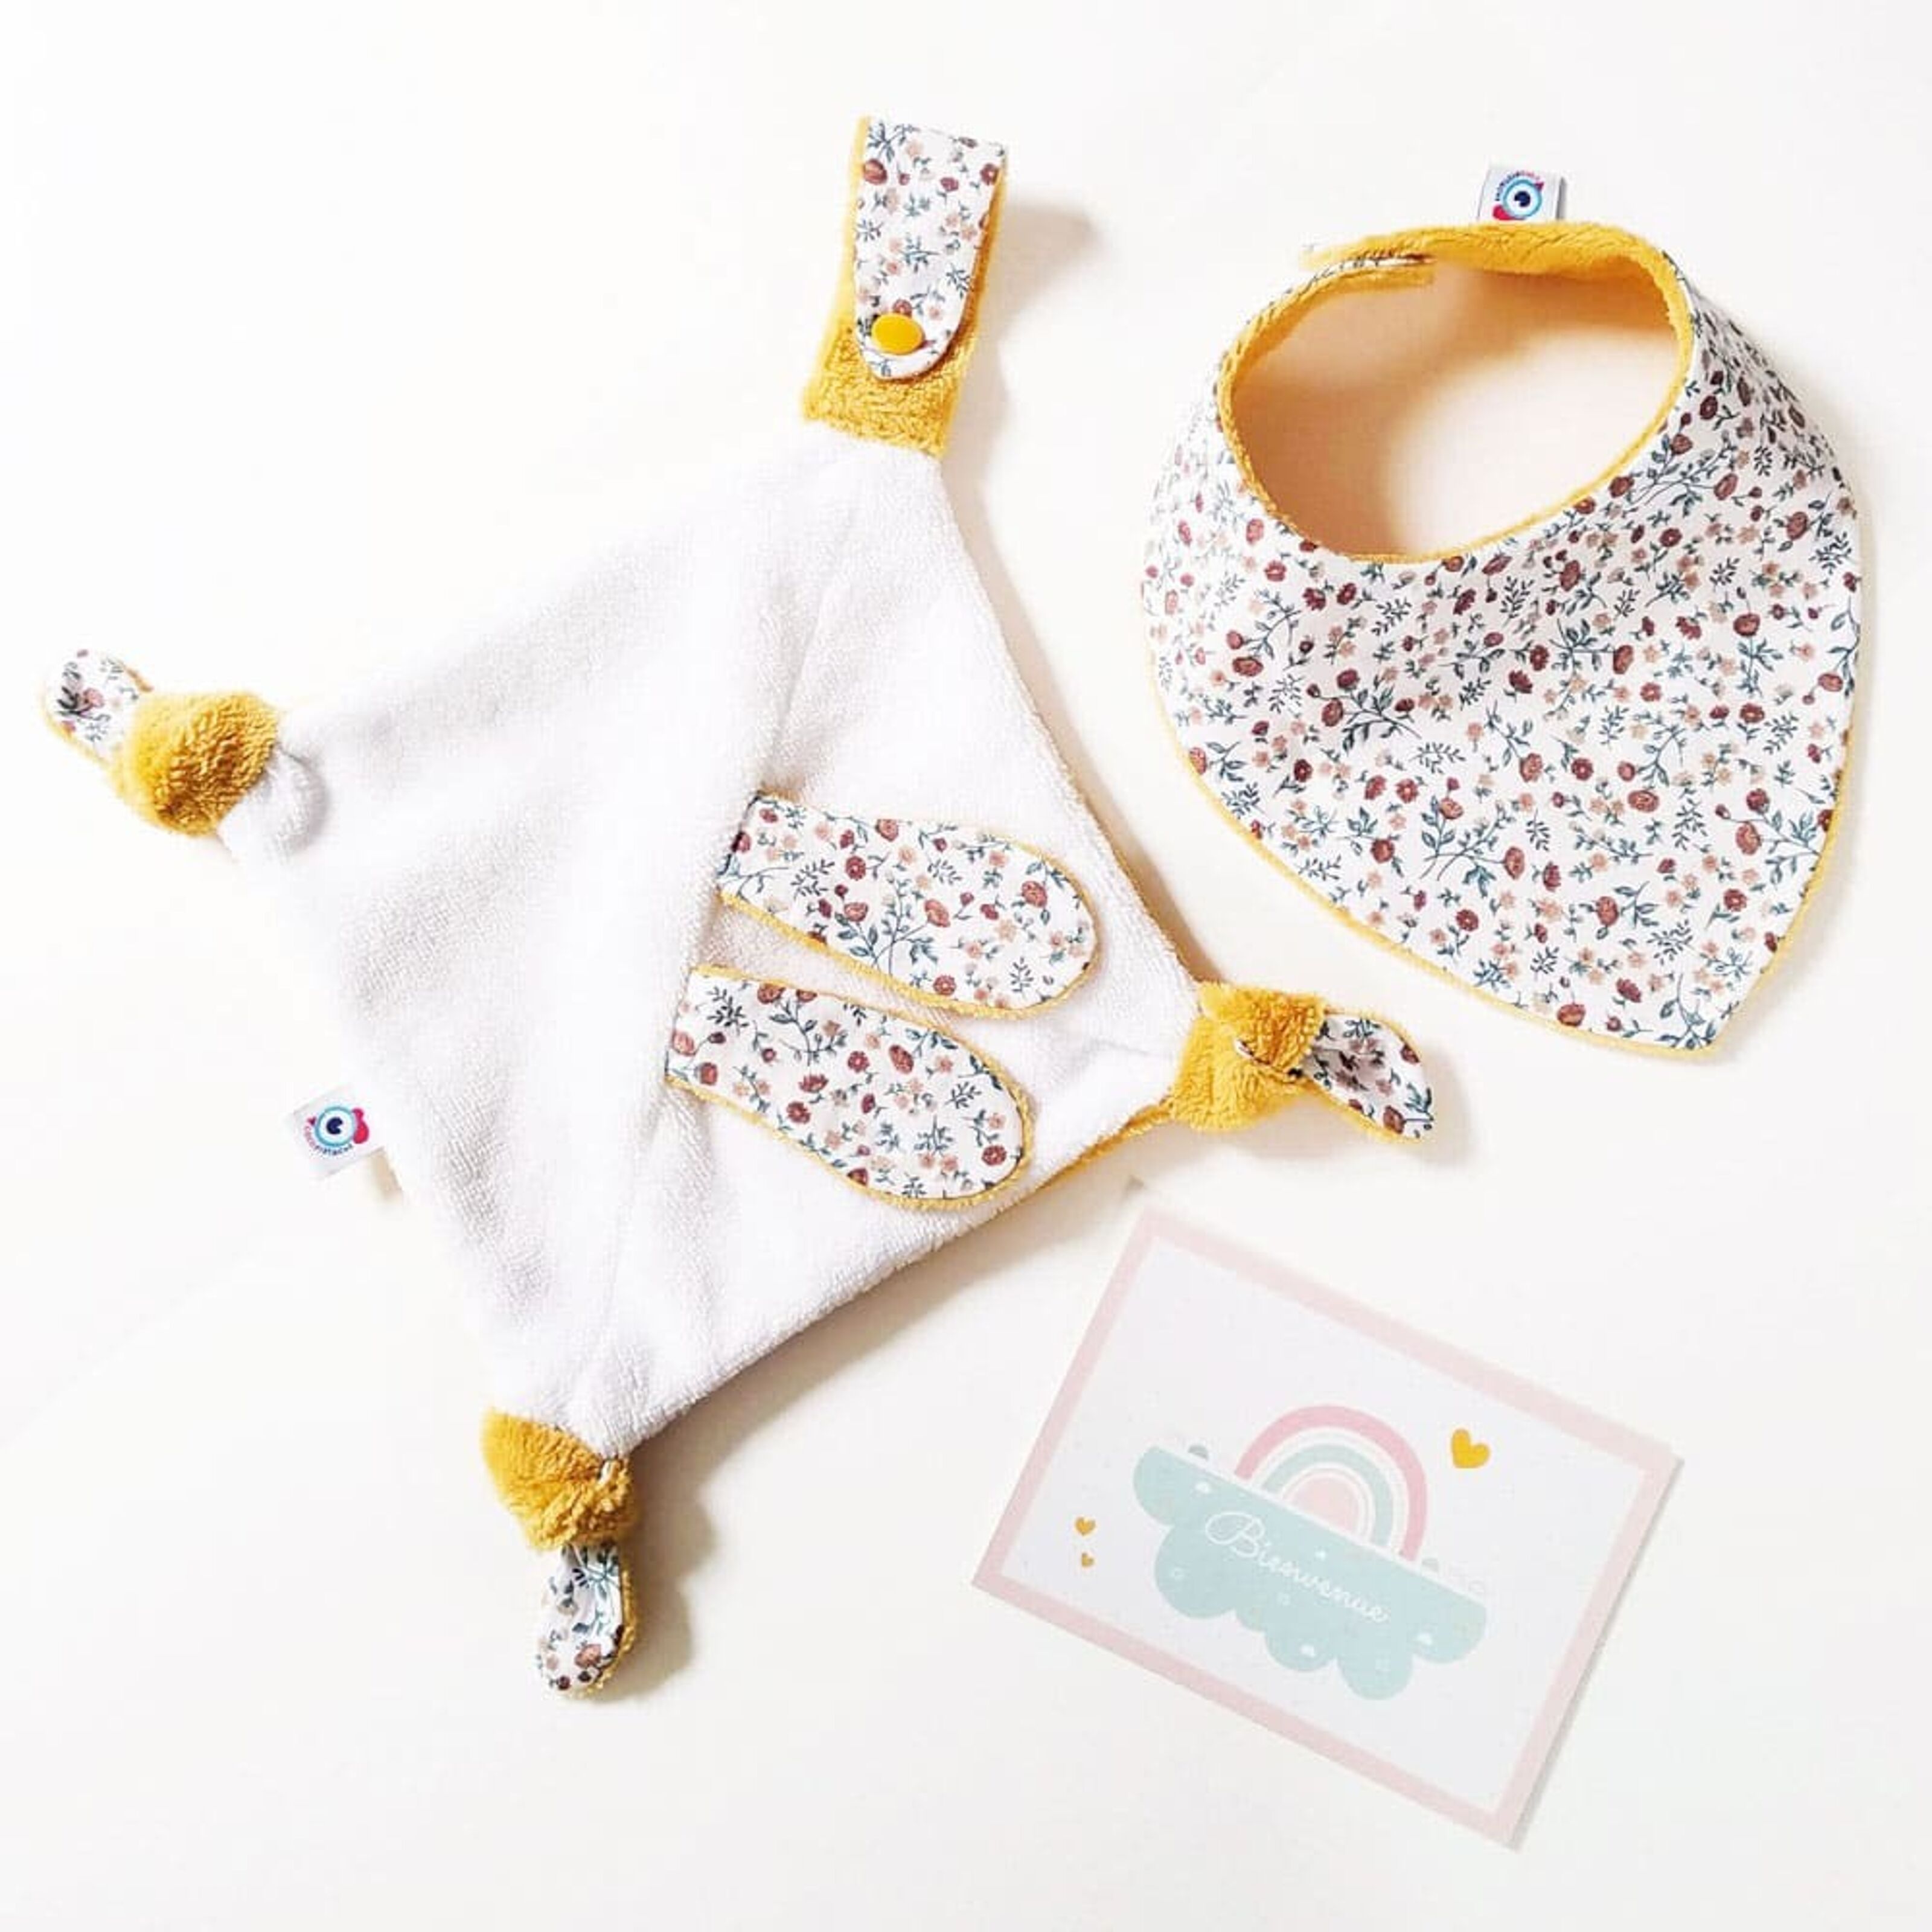 Buy wholesale BIRTH GIFT pack for baby girl boy €29 mustard flowers /  Rabbit flat comforter + 1 Bib + 1 birth card | Erstausstattungspakete